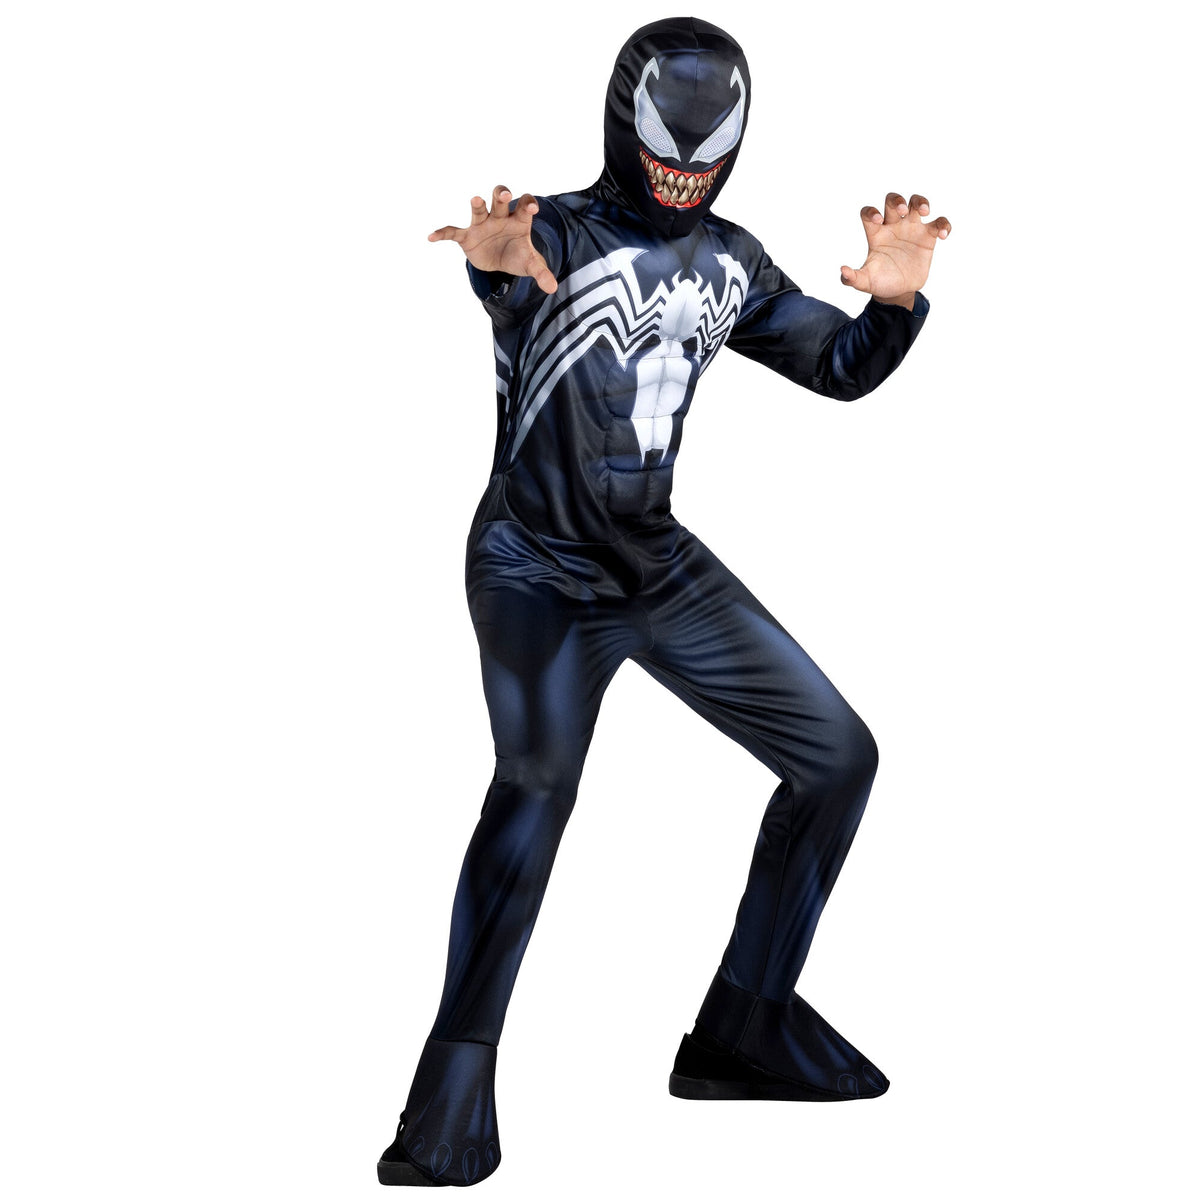 KROEGER Costumes Marvel Venom Costume for Kids, Black Padded Jumpsuit